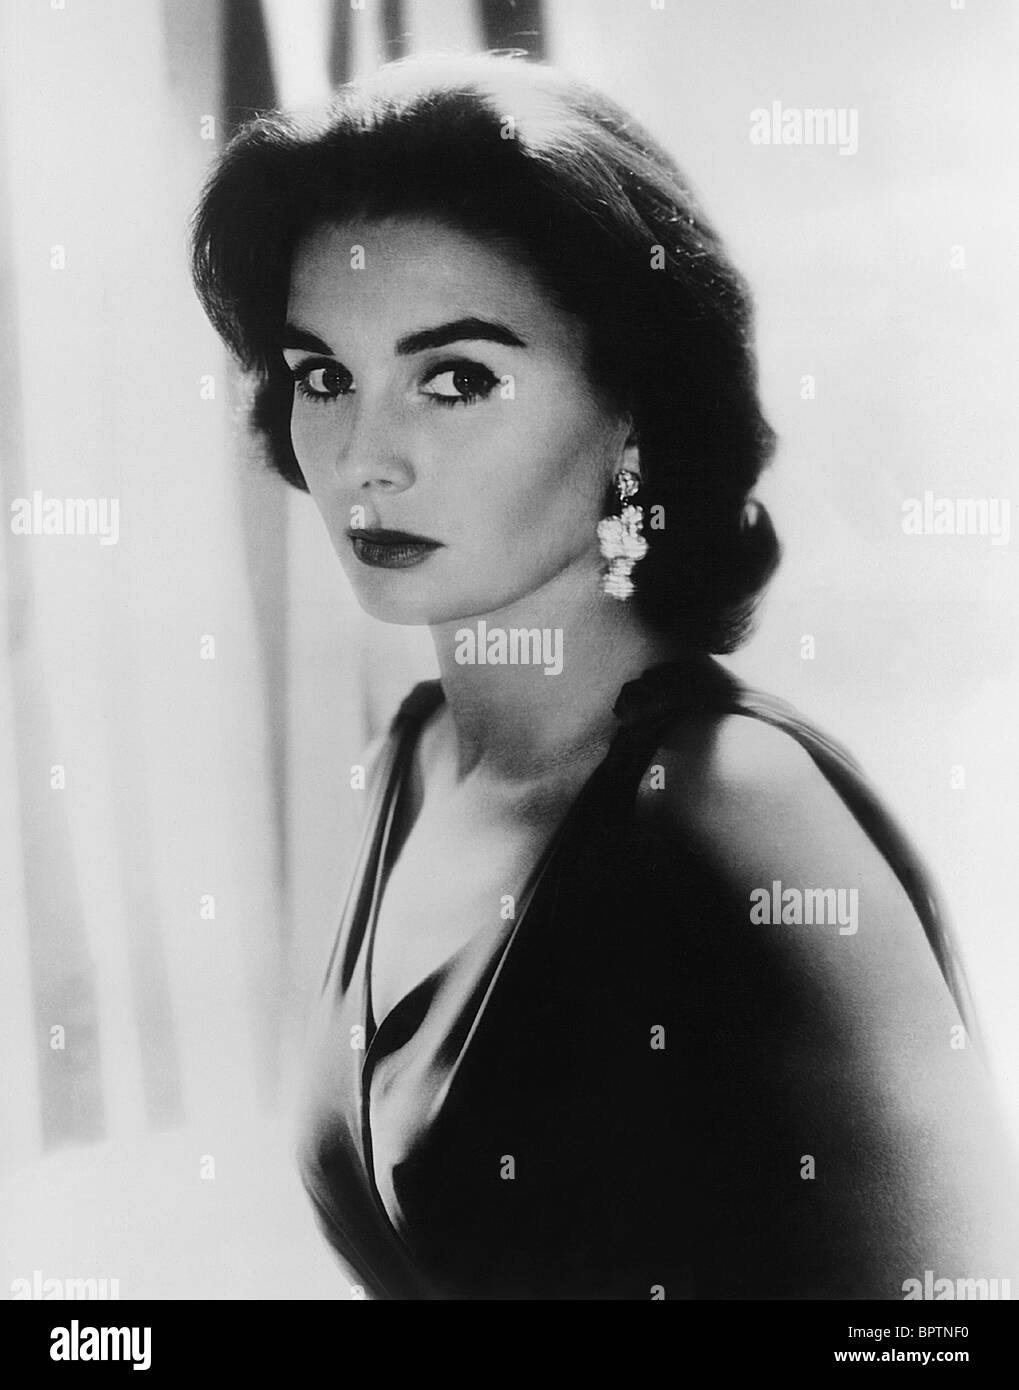 jean-simmons-actress-1960-BPTNF0.jpg